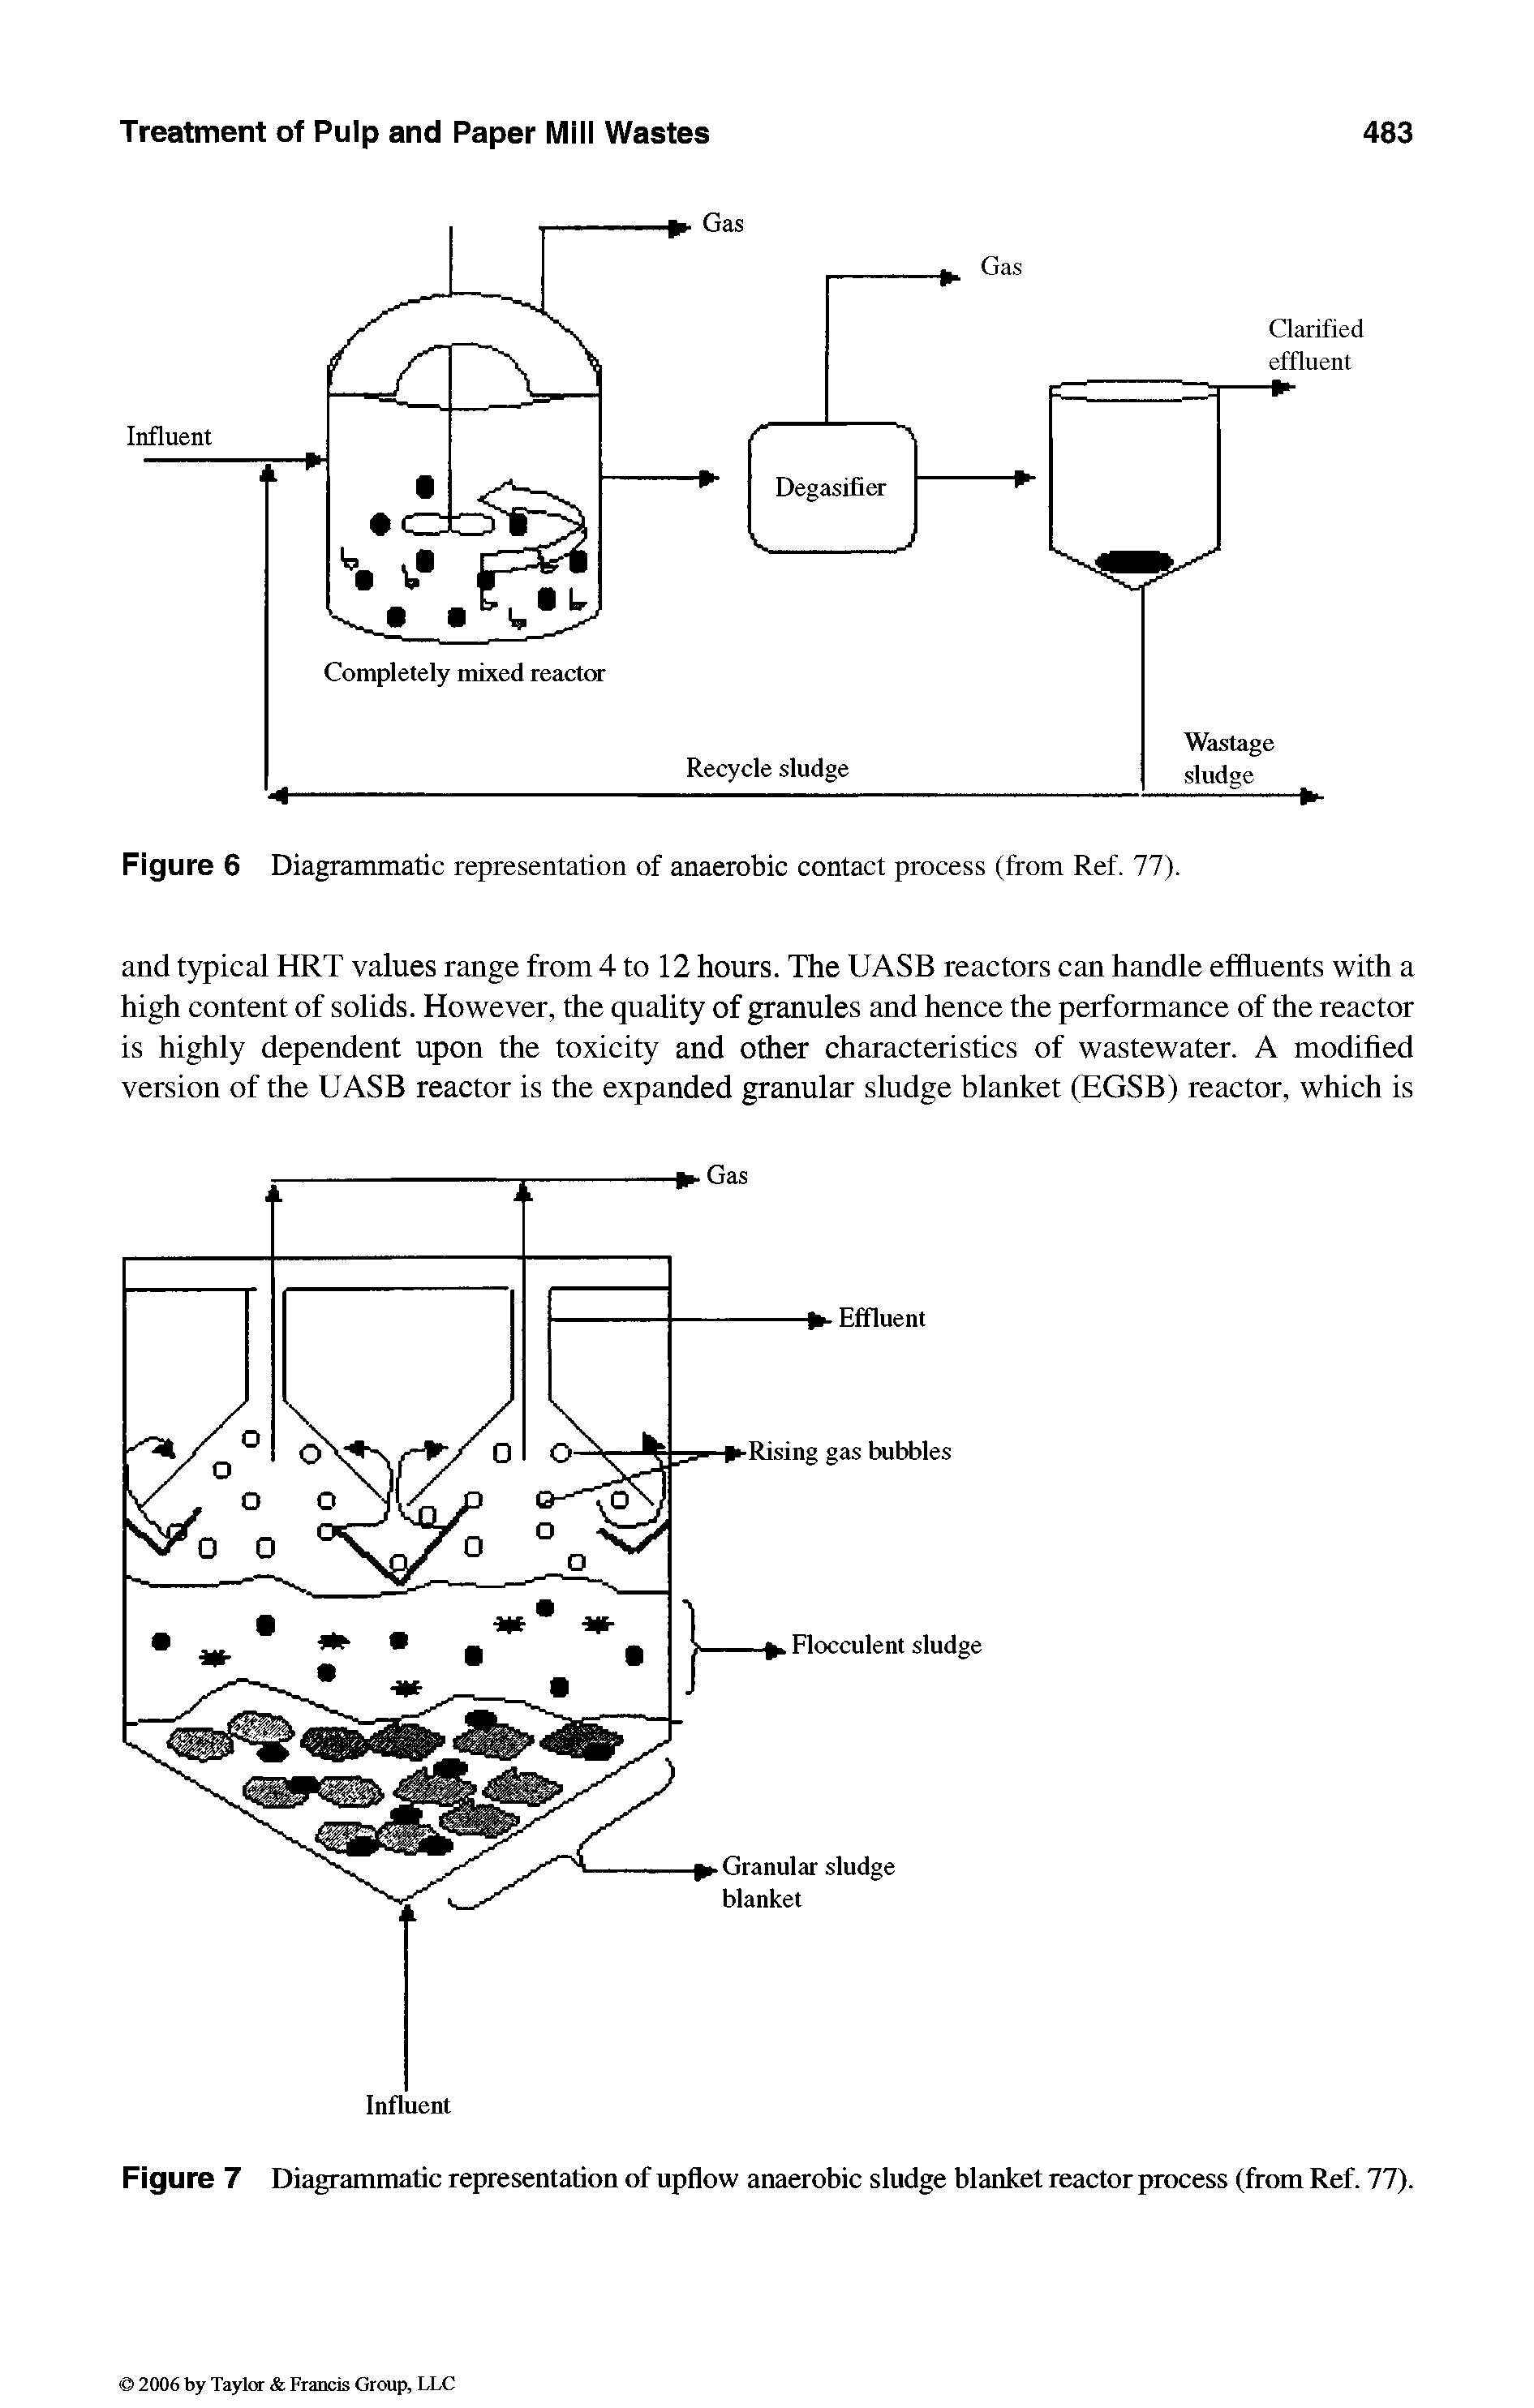 Figure 7 Diagrammatic representation of upflow anaerobic sludge blanket reactor process (from Ref. 77).